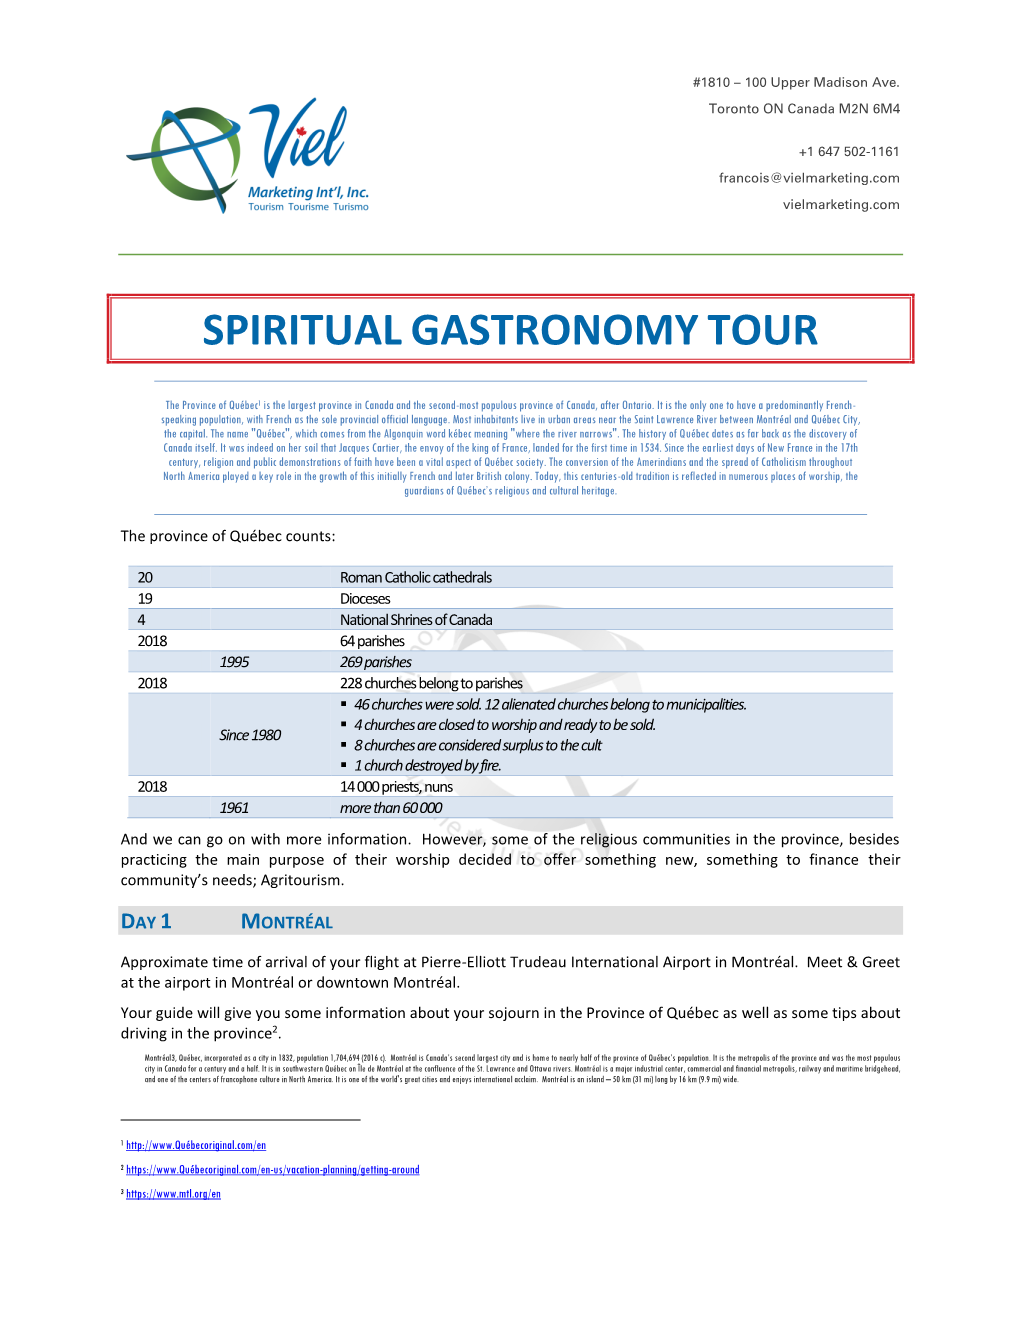 Spiritual Gastronomy in Québec